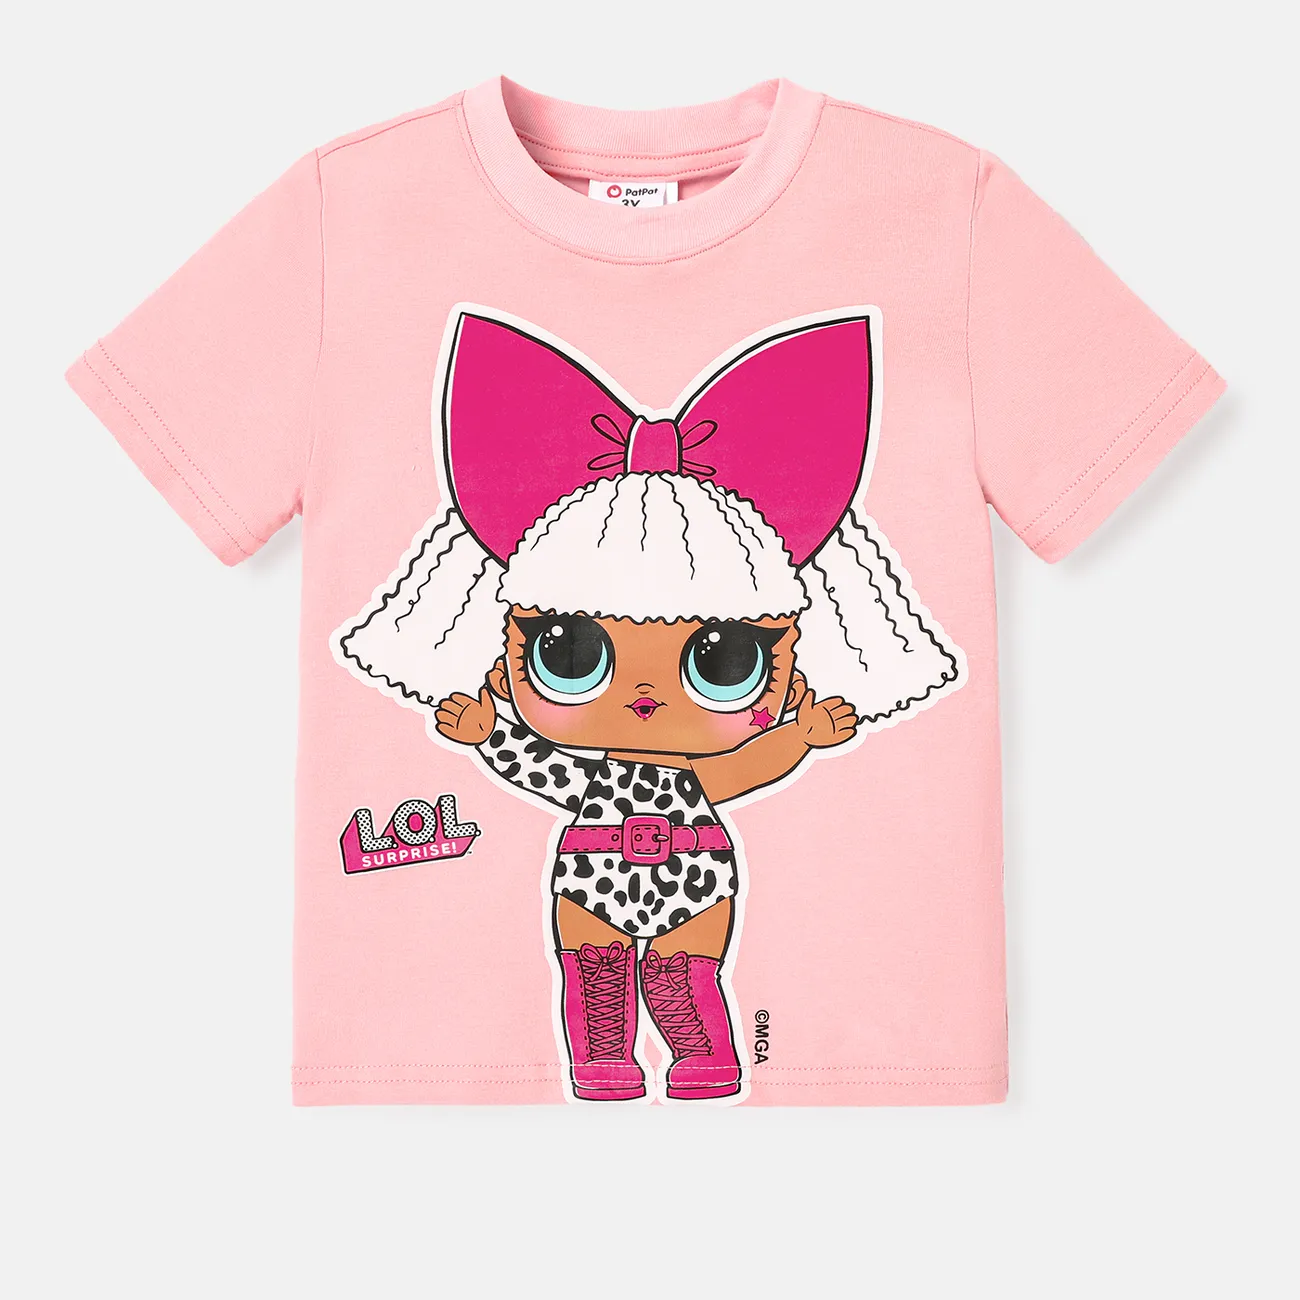 L.O.L. SURPRISE! Toddler/Kid Girl Character Print Short-sleeve Cotton Tee Pink big image 1